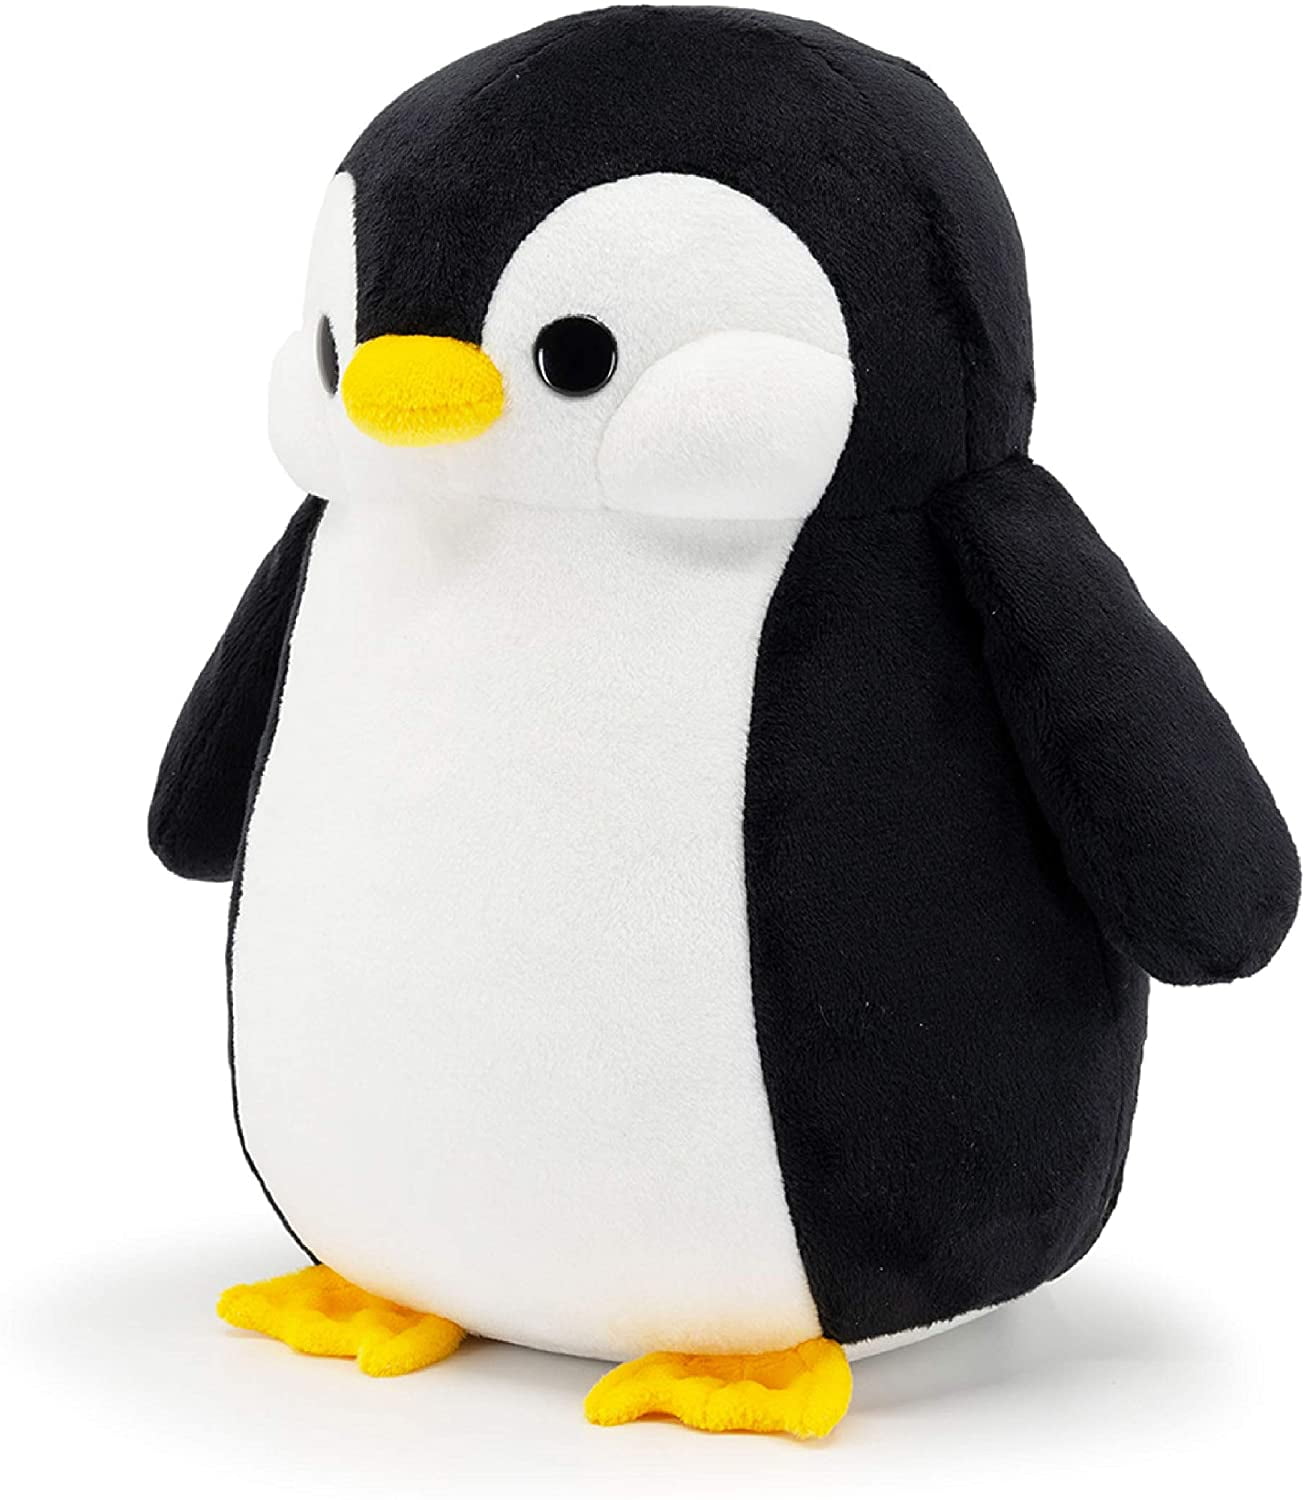 Penguin Stuffed Animal Plushie - Kawaii Plush Toy - Plushies for All Ages